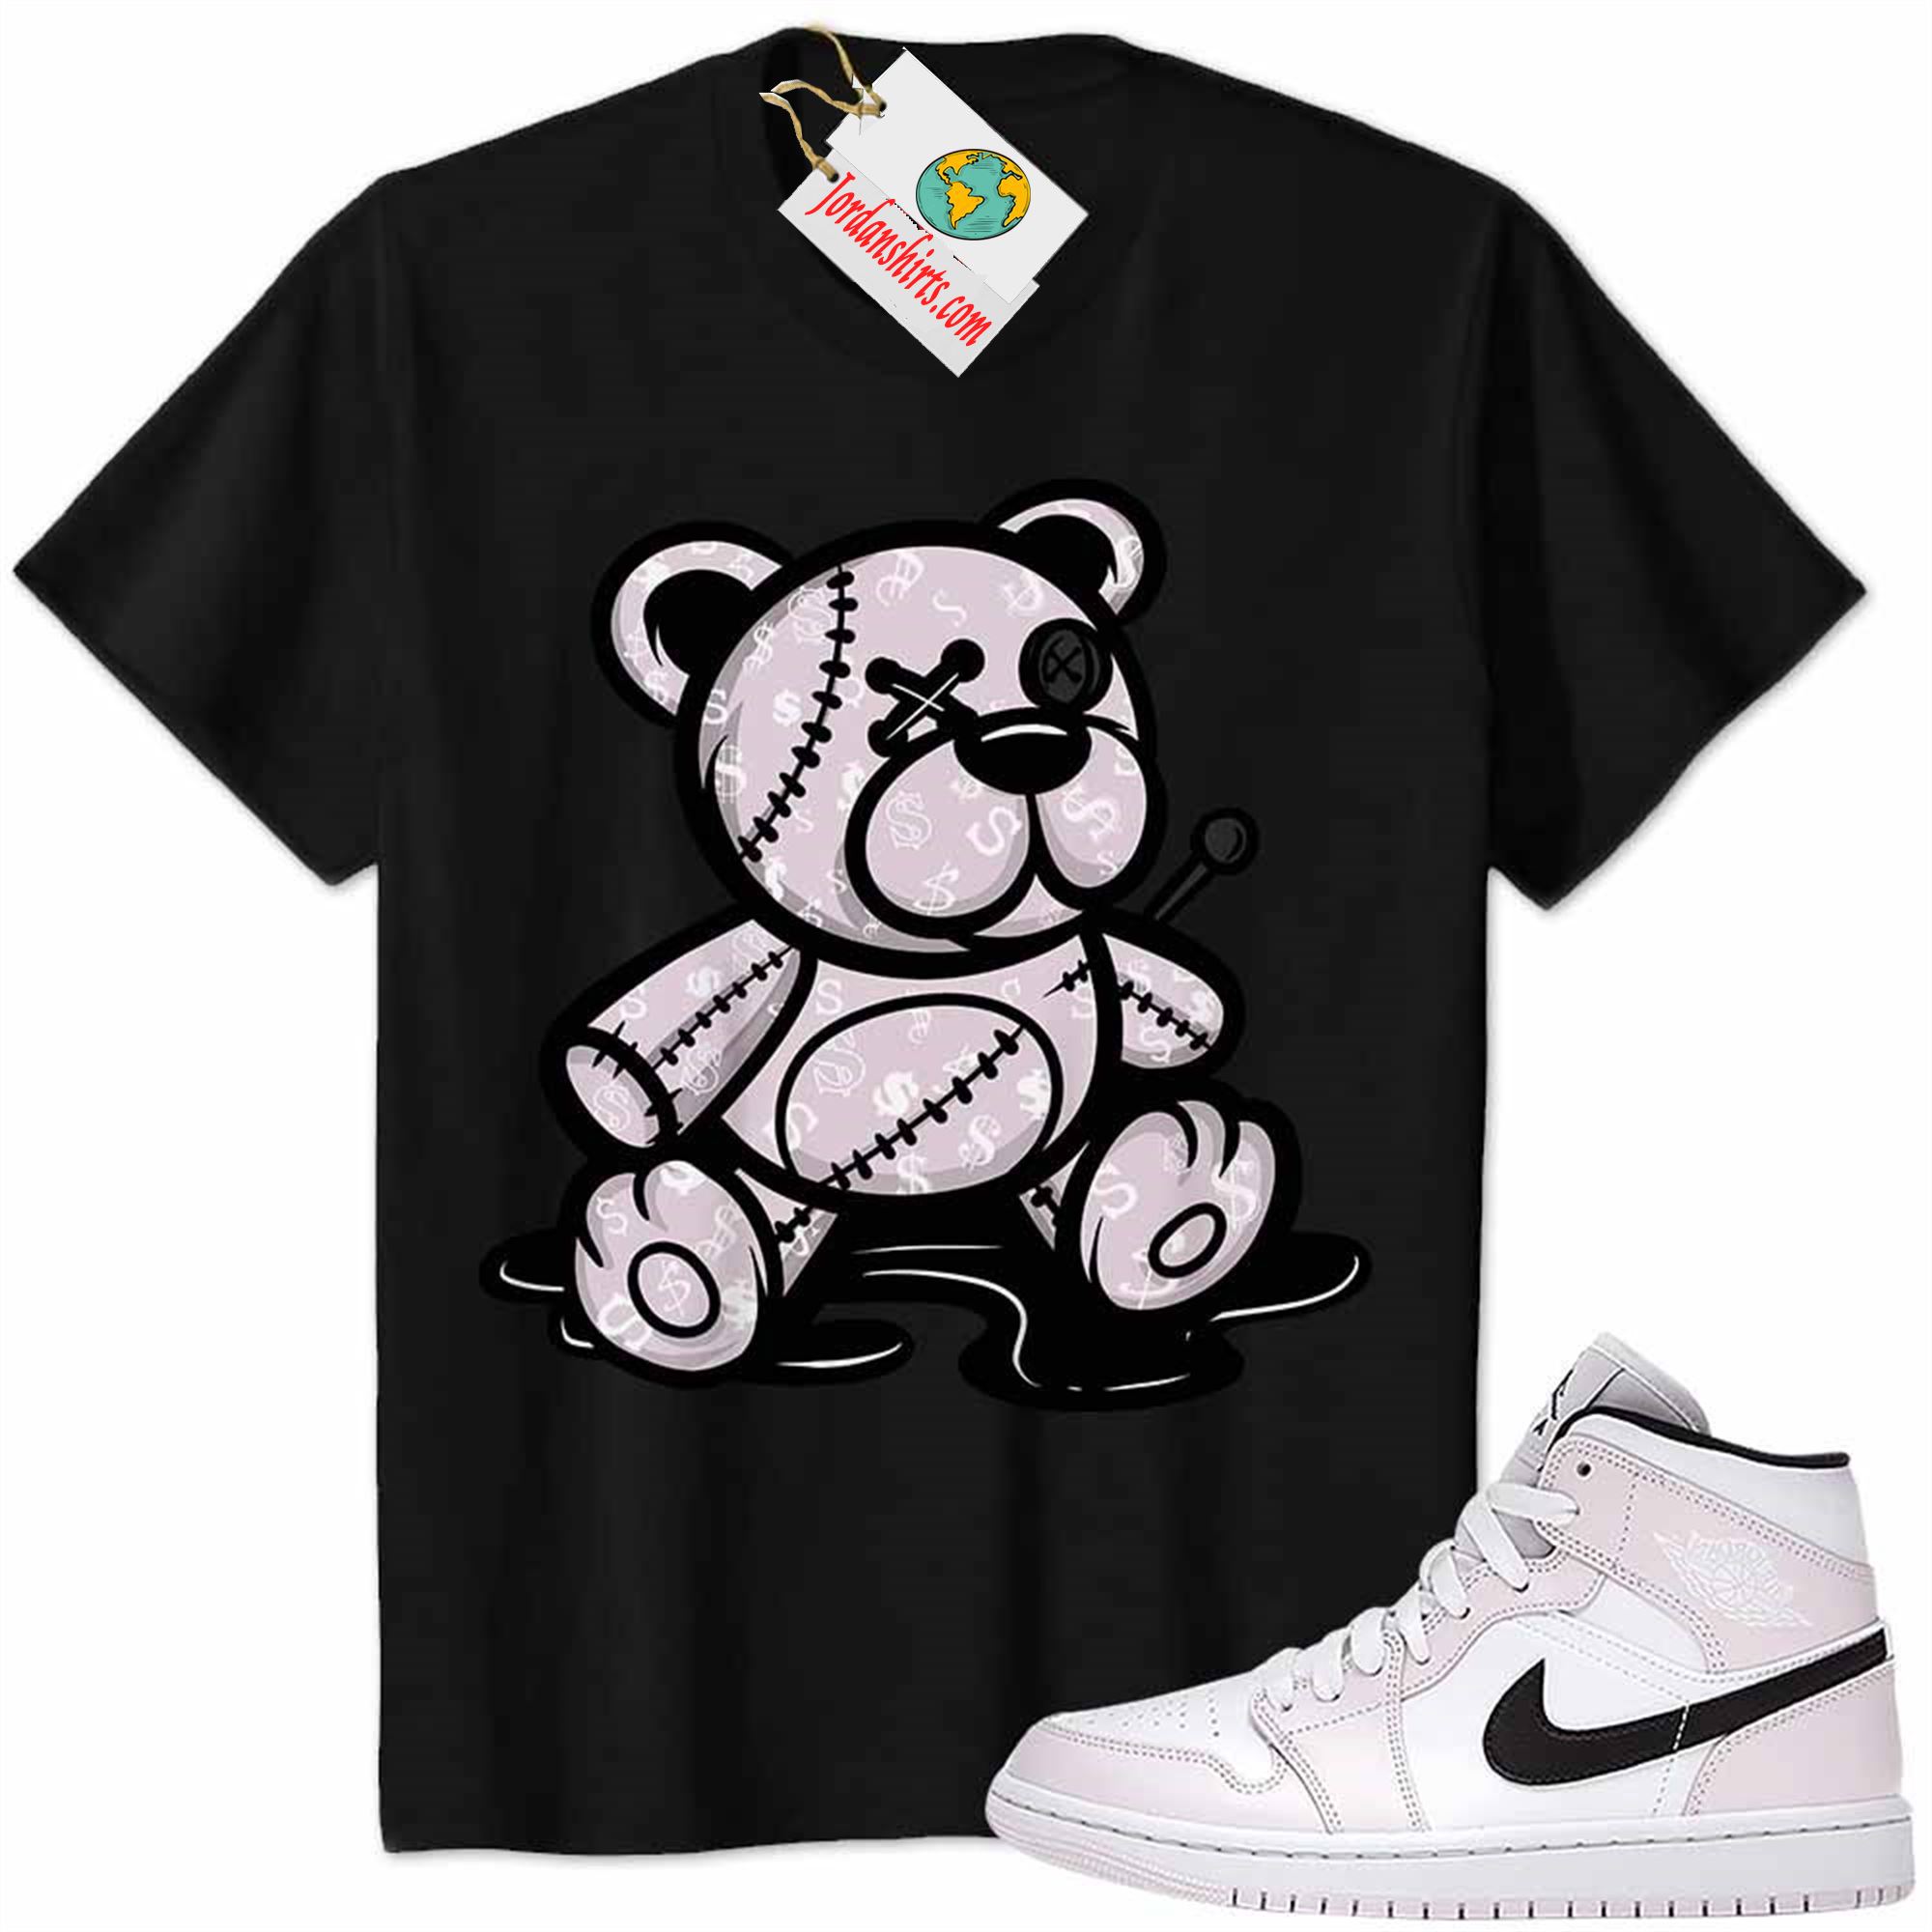 Jordan 1 Shirt, Jordan 1 Barely Rose Shirt Teddy Bear All Money In Black Full Size Up To 5xl